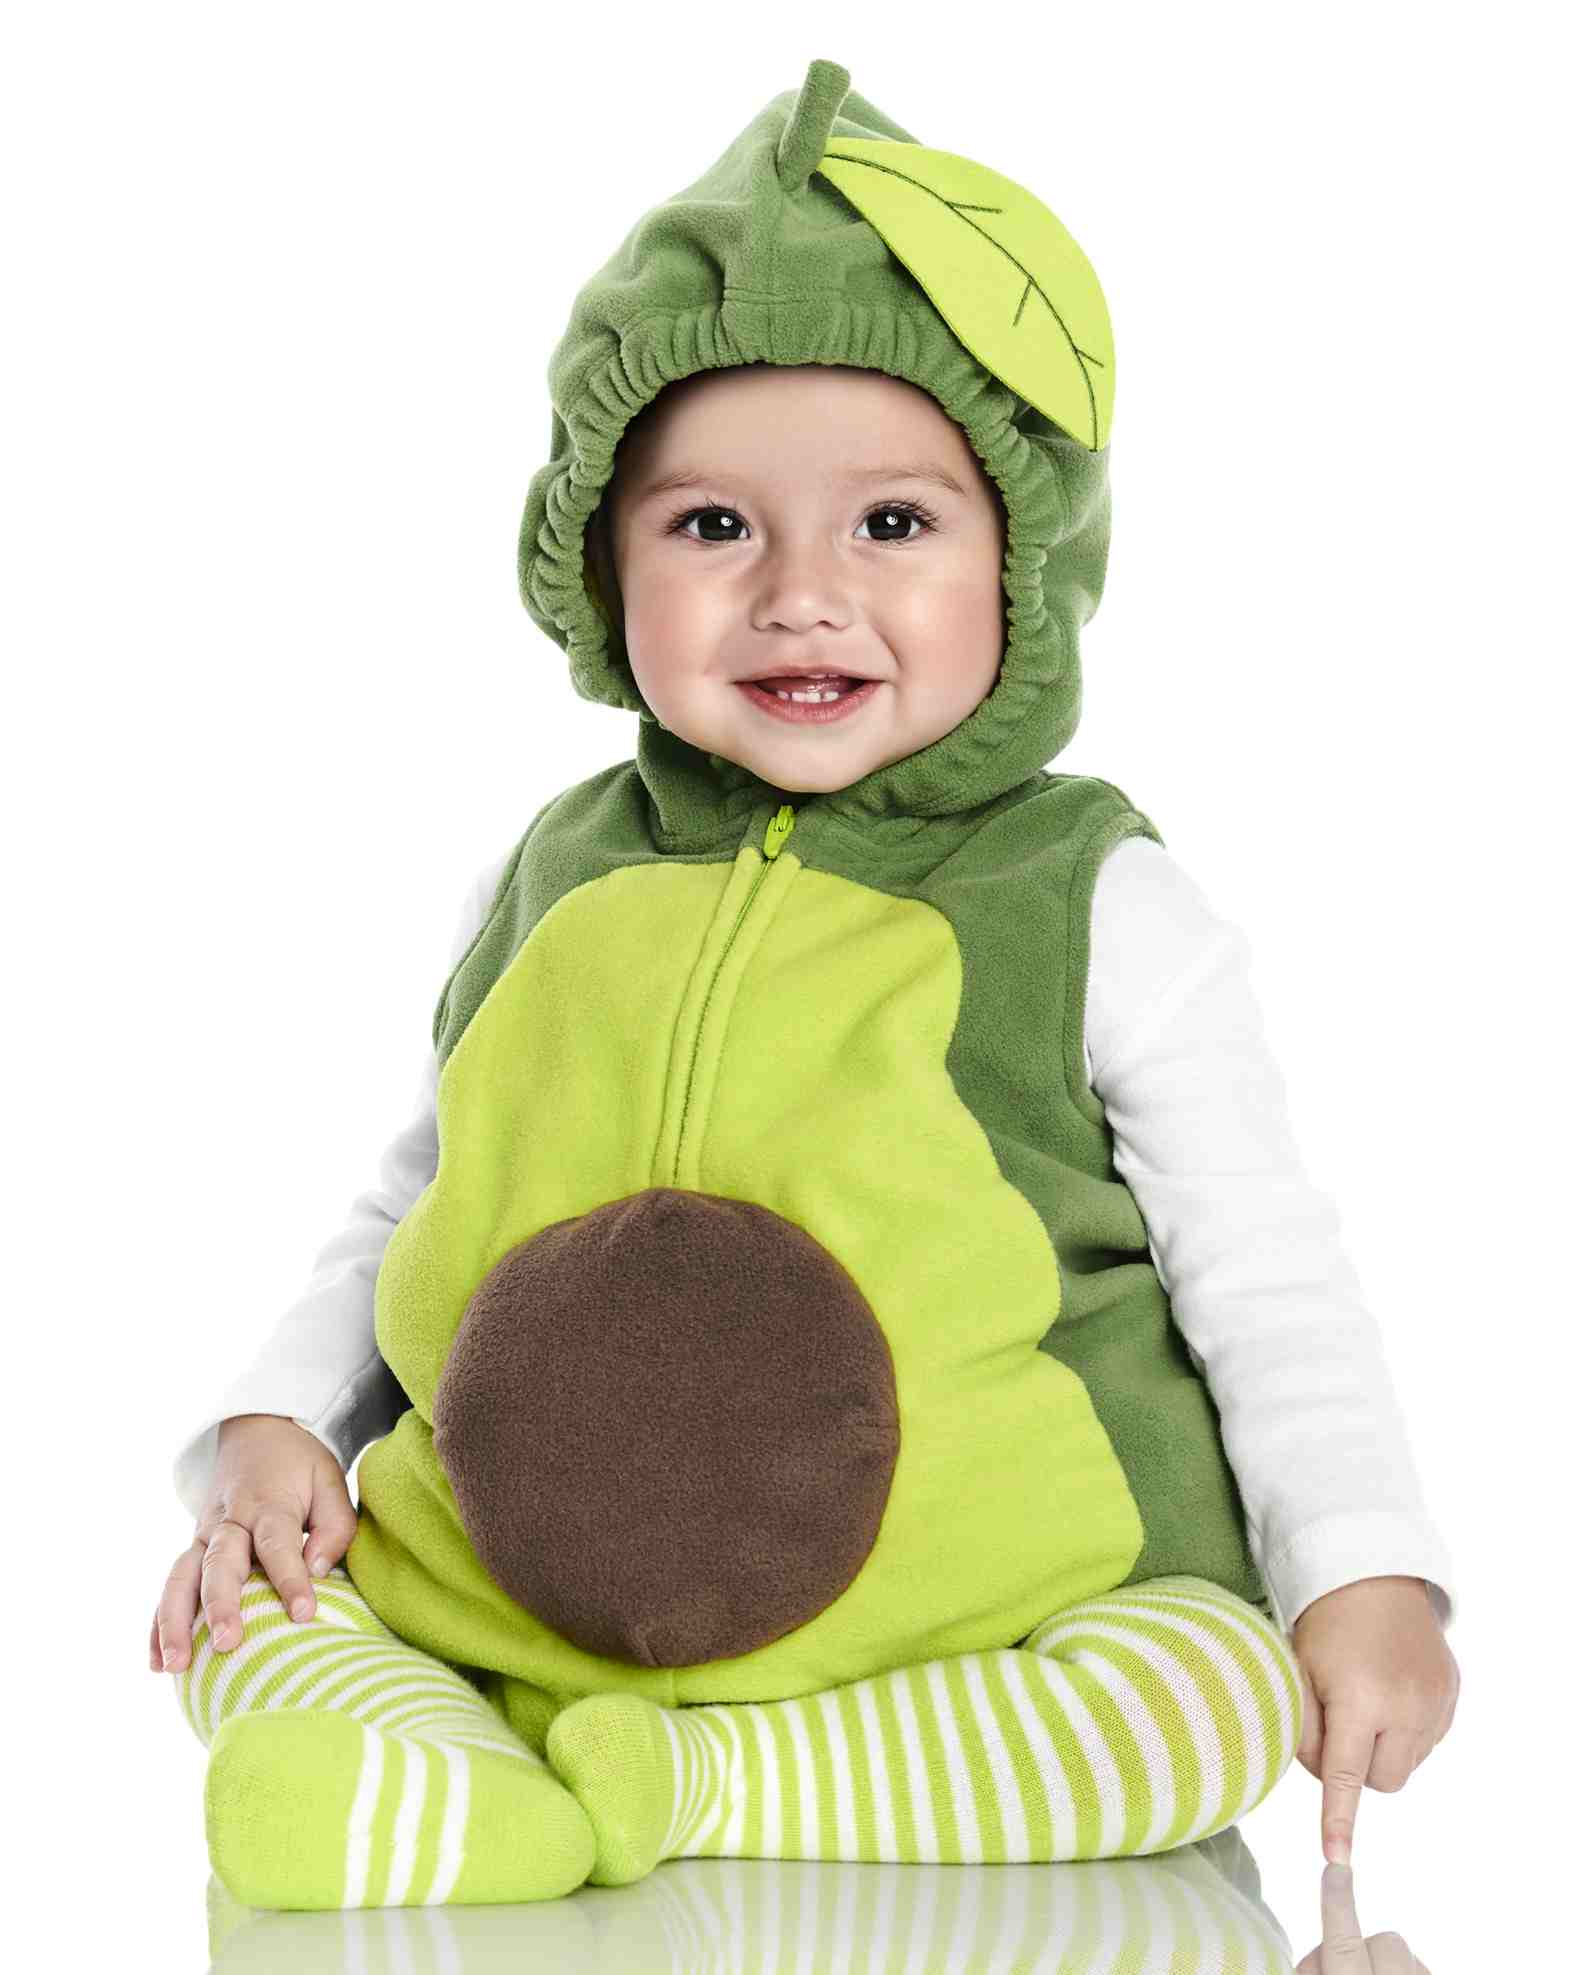 Avocado Kostüm für Babys lustige Kostümideen Karneval Kinder